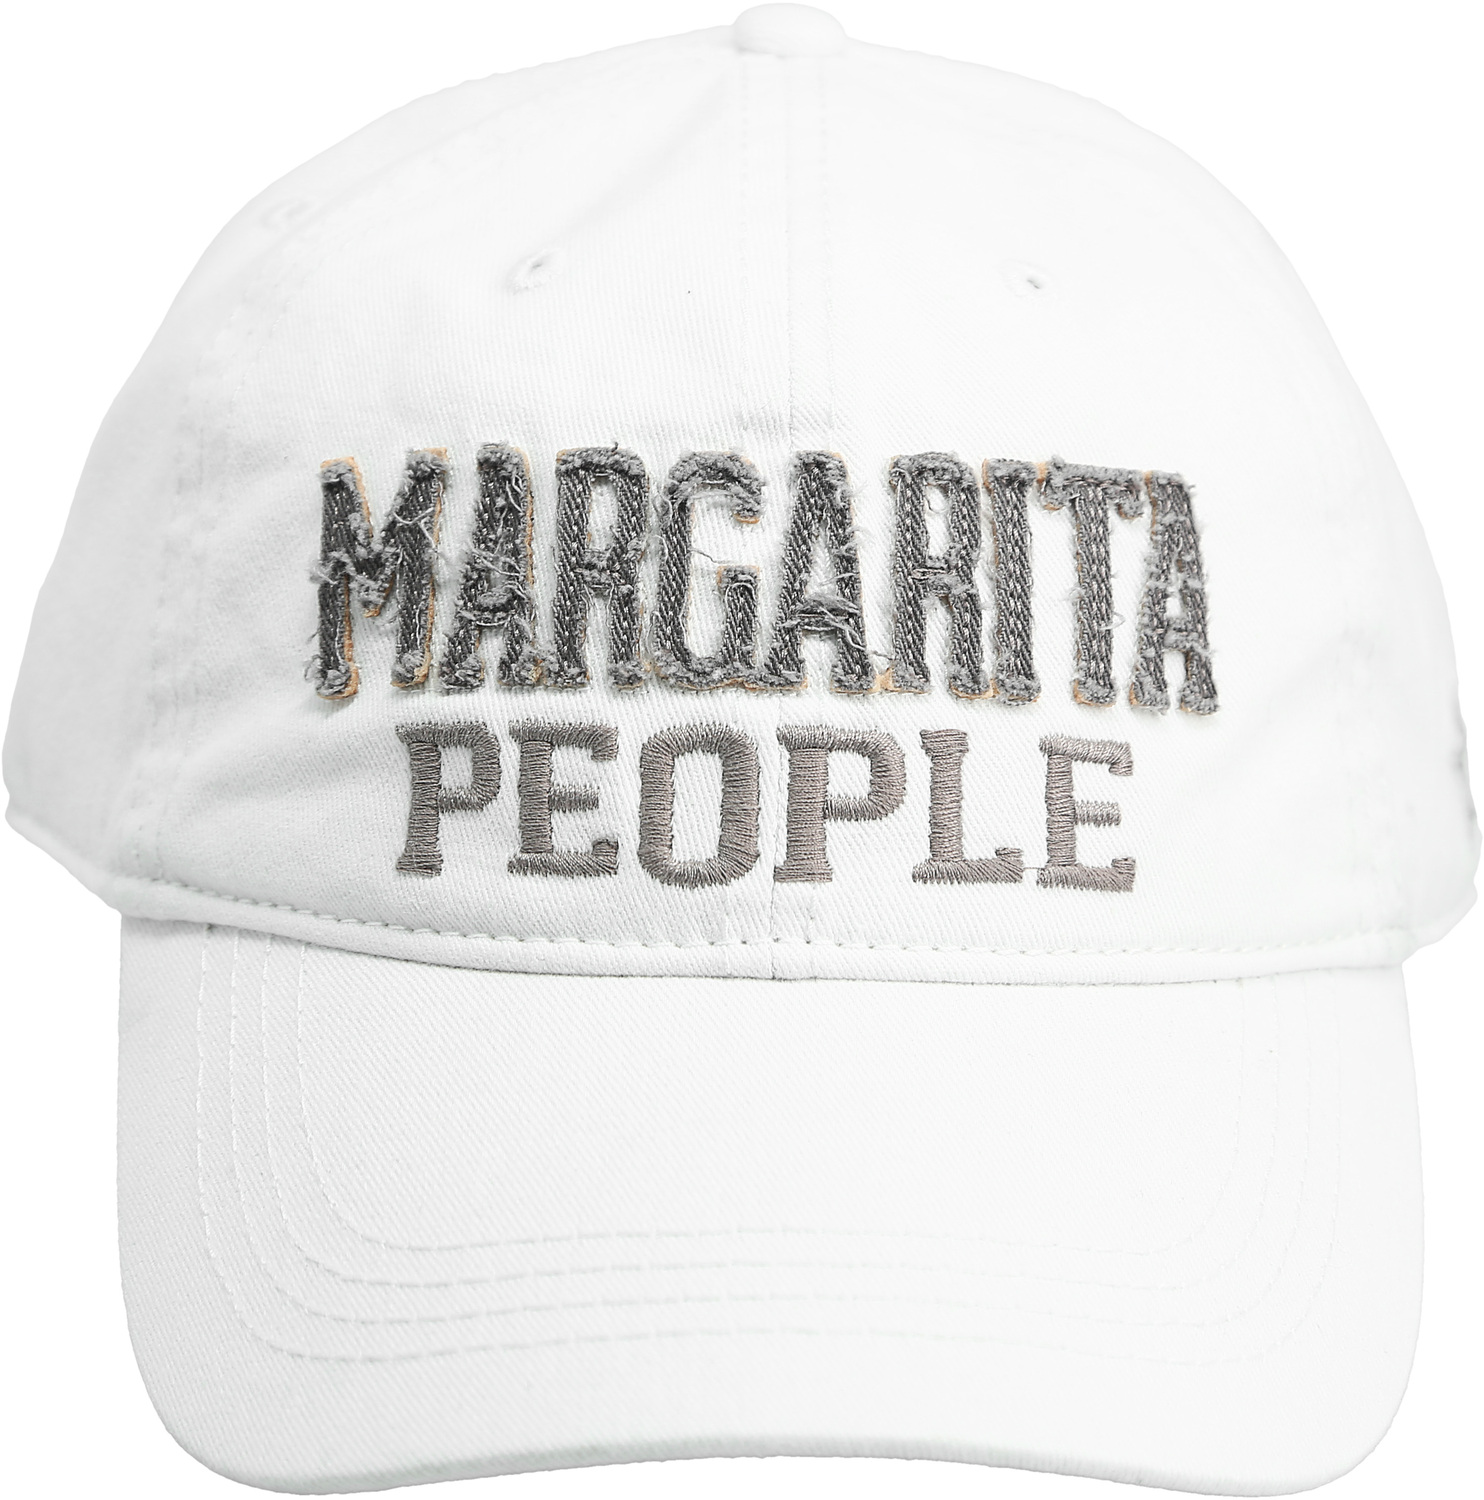 Margarita People by We People - Margarita People - White Adjustable Hat